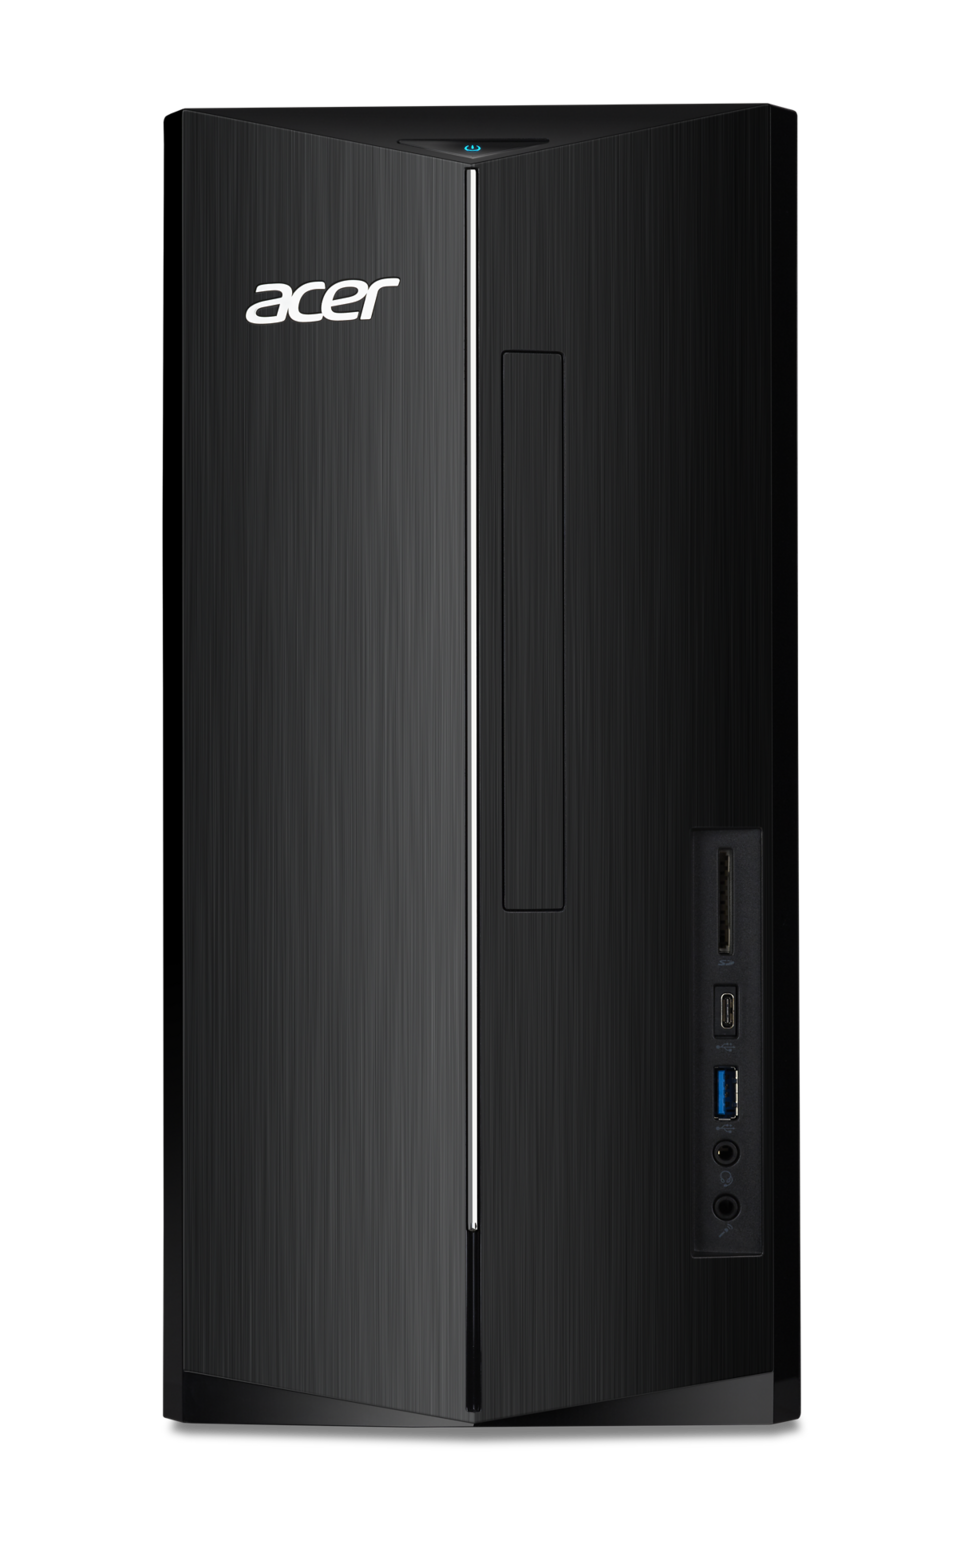 Acer Aspire TC-1760-UA92 Desktop | 12th Gen Intel Core i5-12400 6-Core  Processor | 12GB 3200MHz DDR4 | 512GB NVMe M.2 SSD | 8X DVD | Intel  Wireless